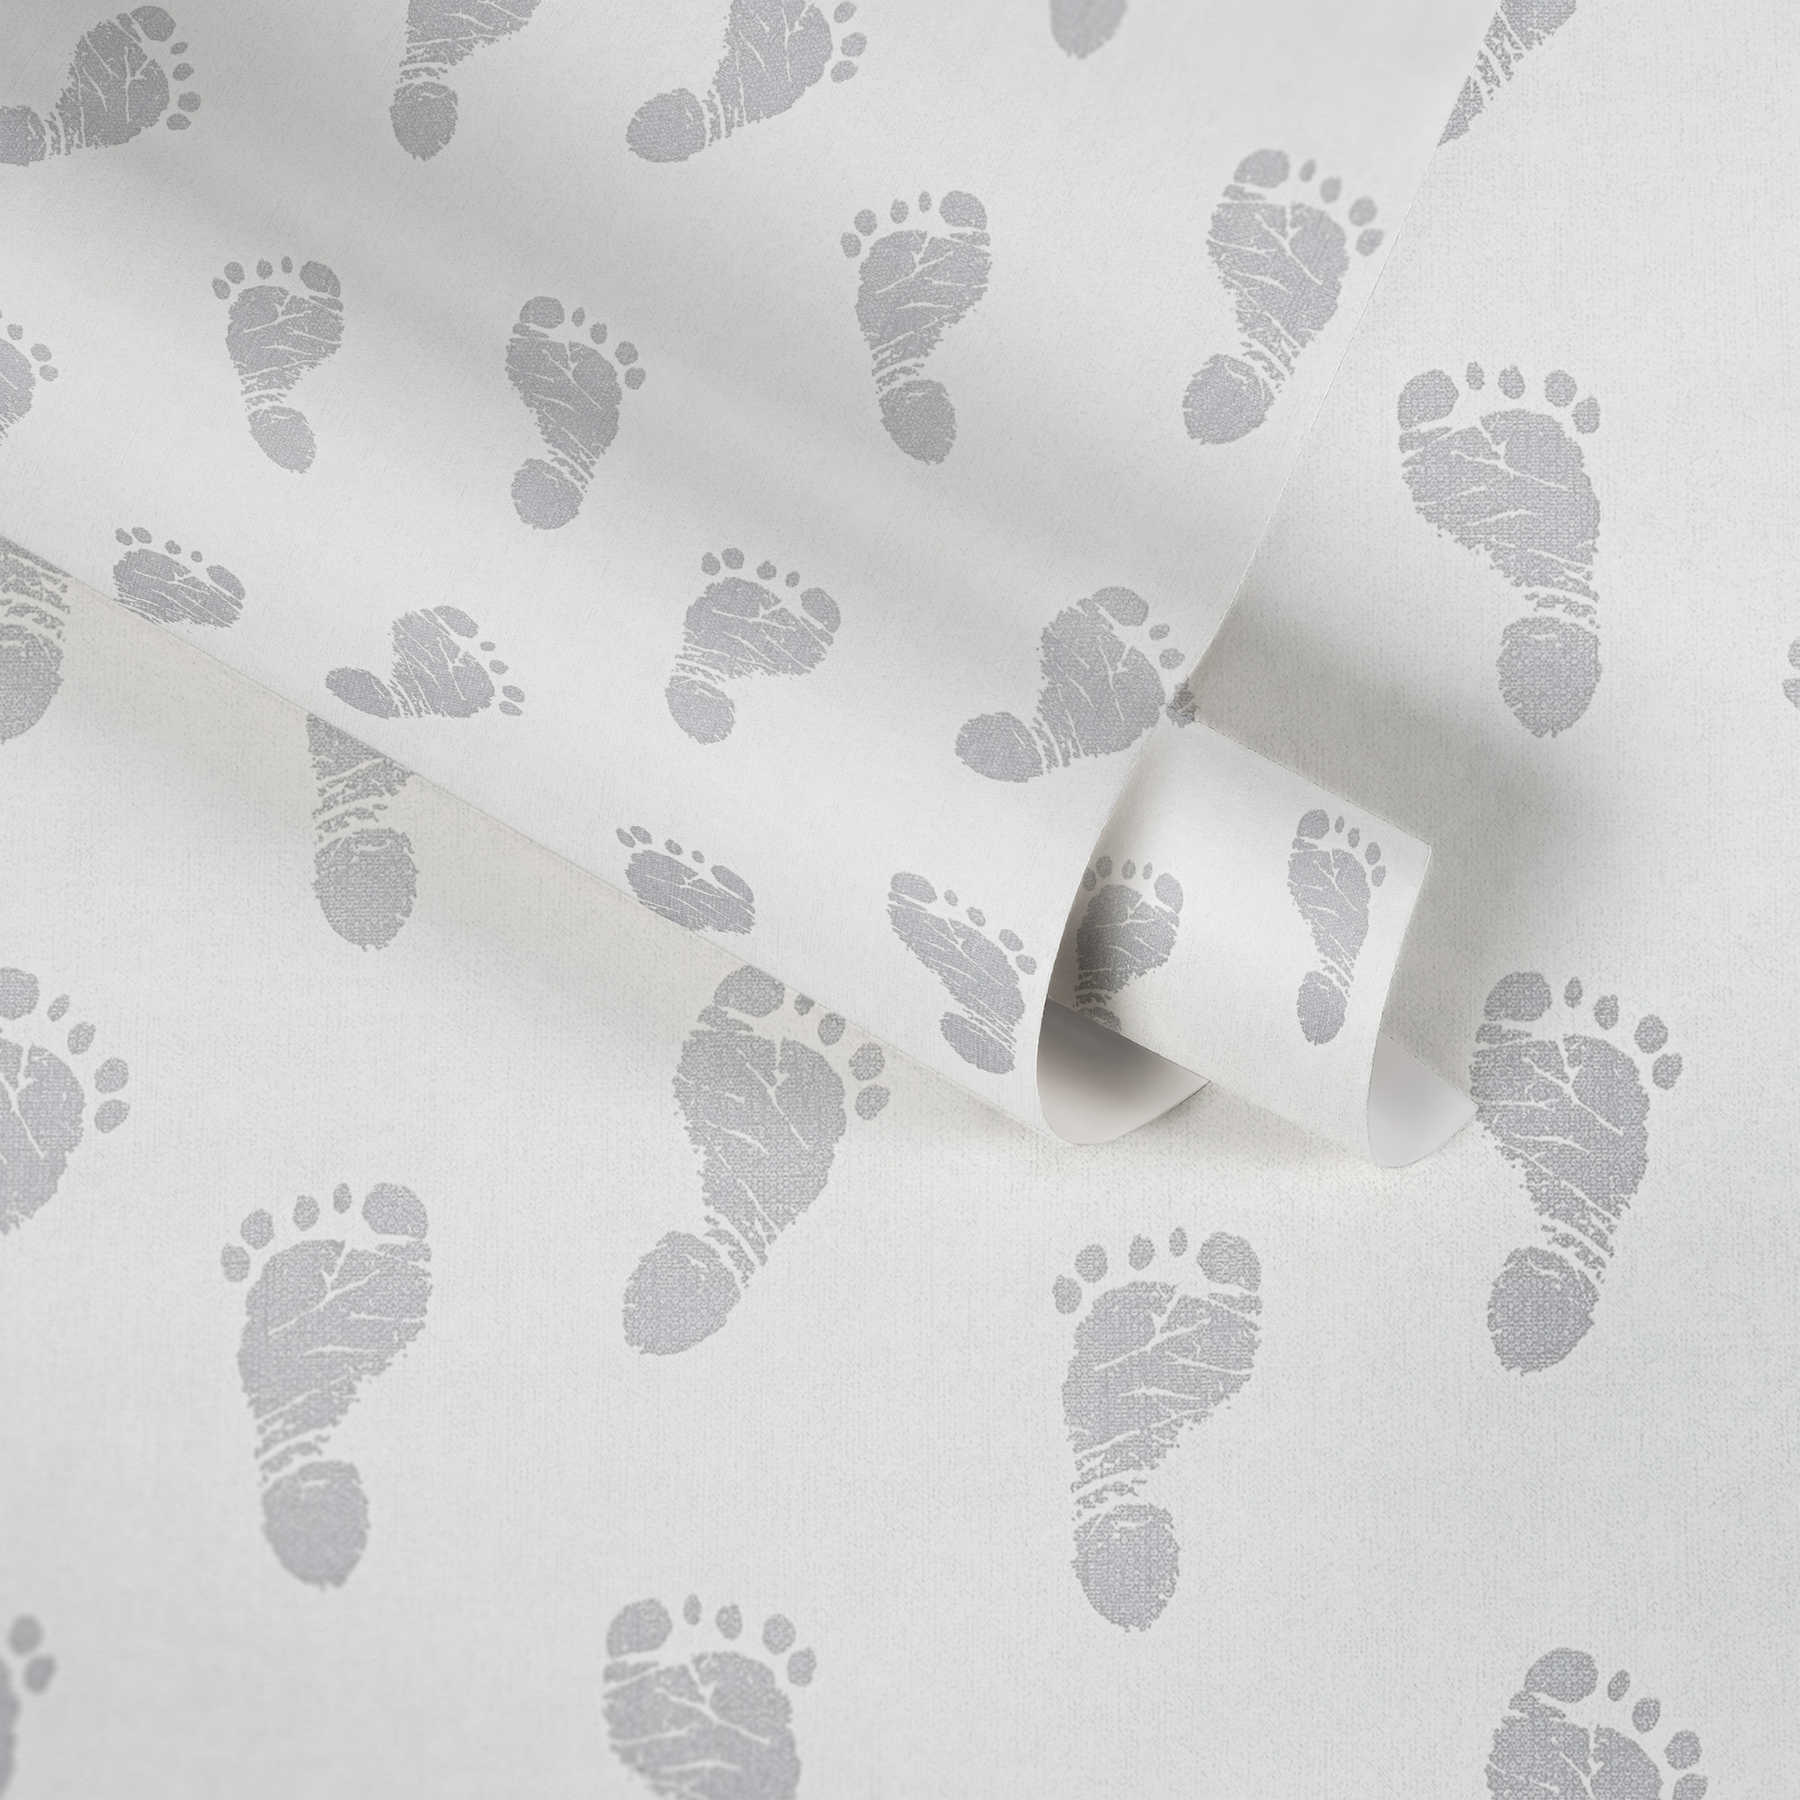             Baby wallpaper with feet pattern - metallic, white
        